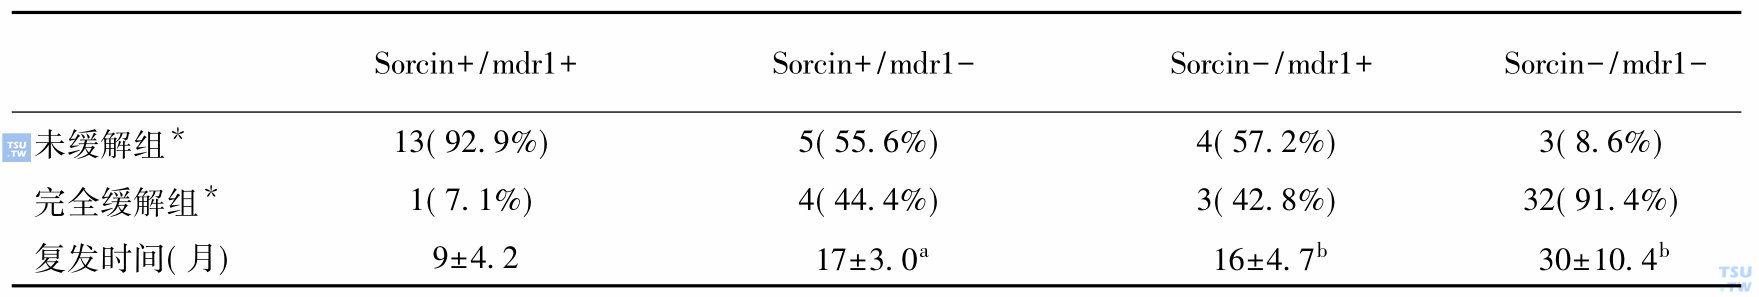 sorcin基因与mdr1/Pgp基因共表达的临床意义